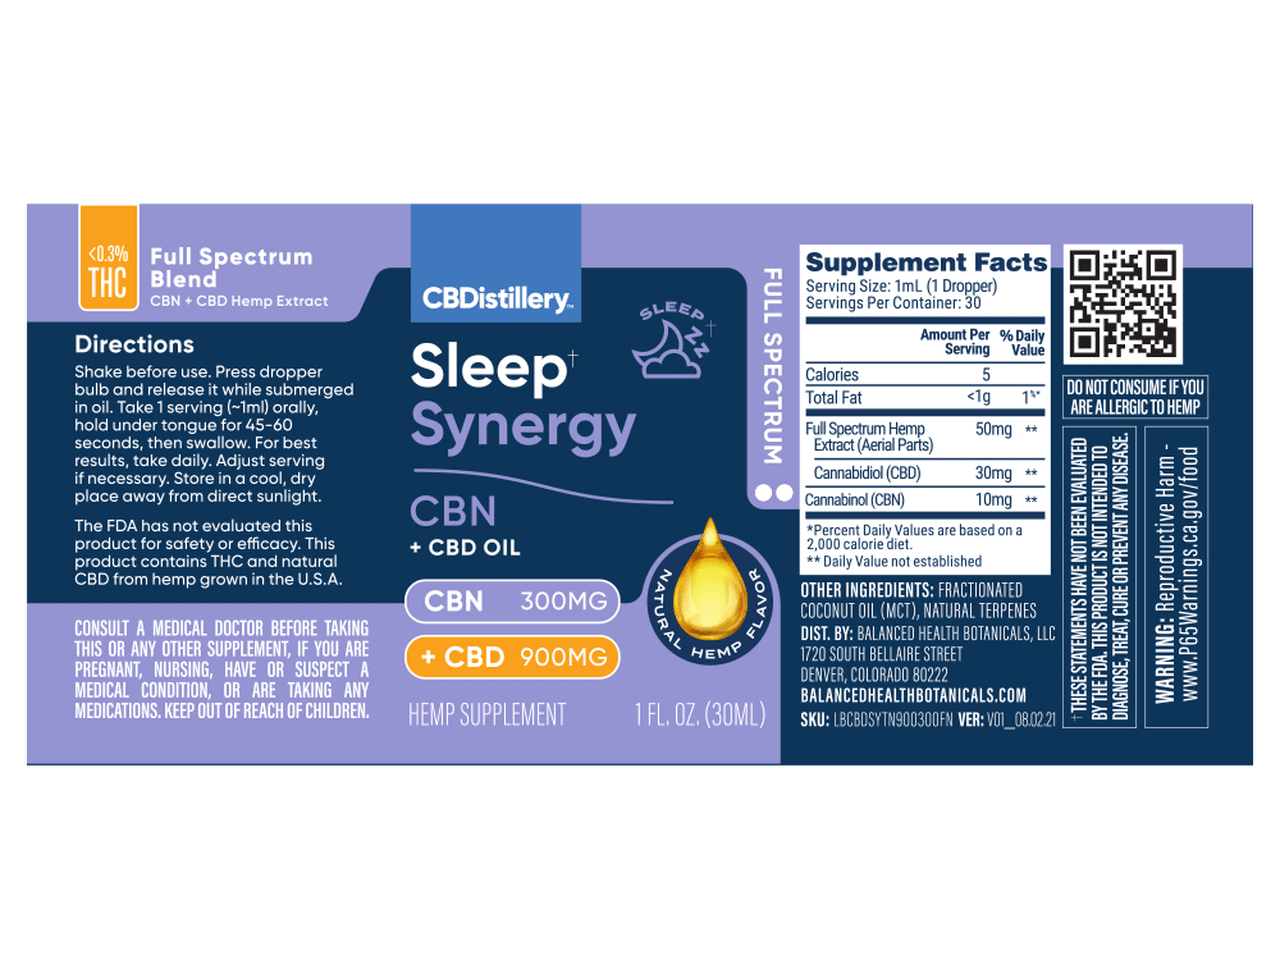 CBDistillery, Extra Strength Sleep Synergy CBN + CBD 1-3 Tincture, Full Spectrum, 1oz, 300mg CBN and 900mg CBD 1